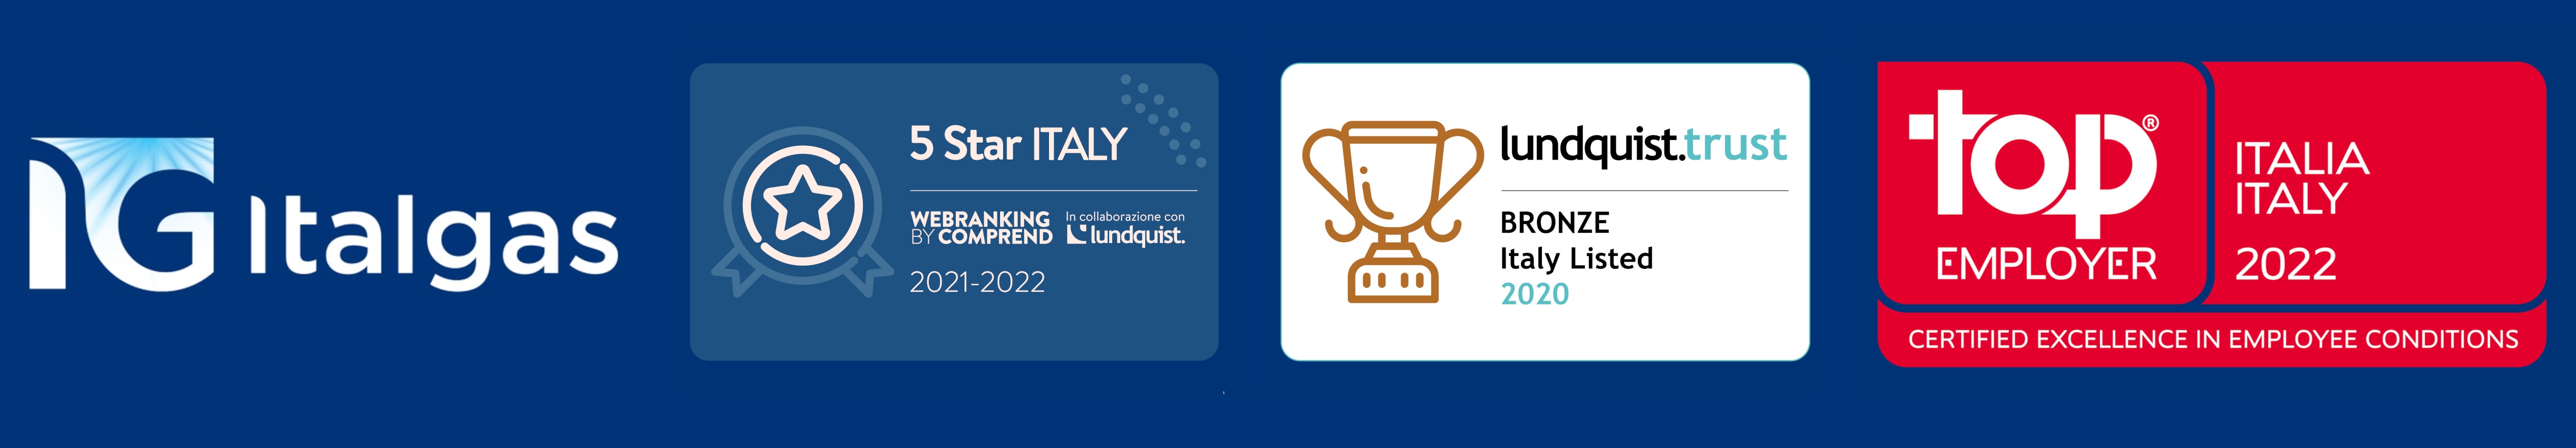 Italgas, Five Star Italy, Lundquist Trust, Top Employer Italy 2022 logos